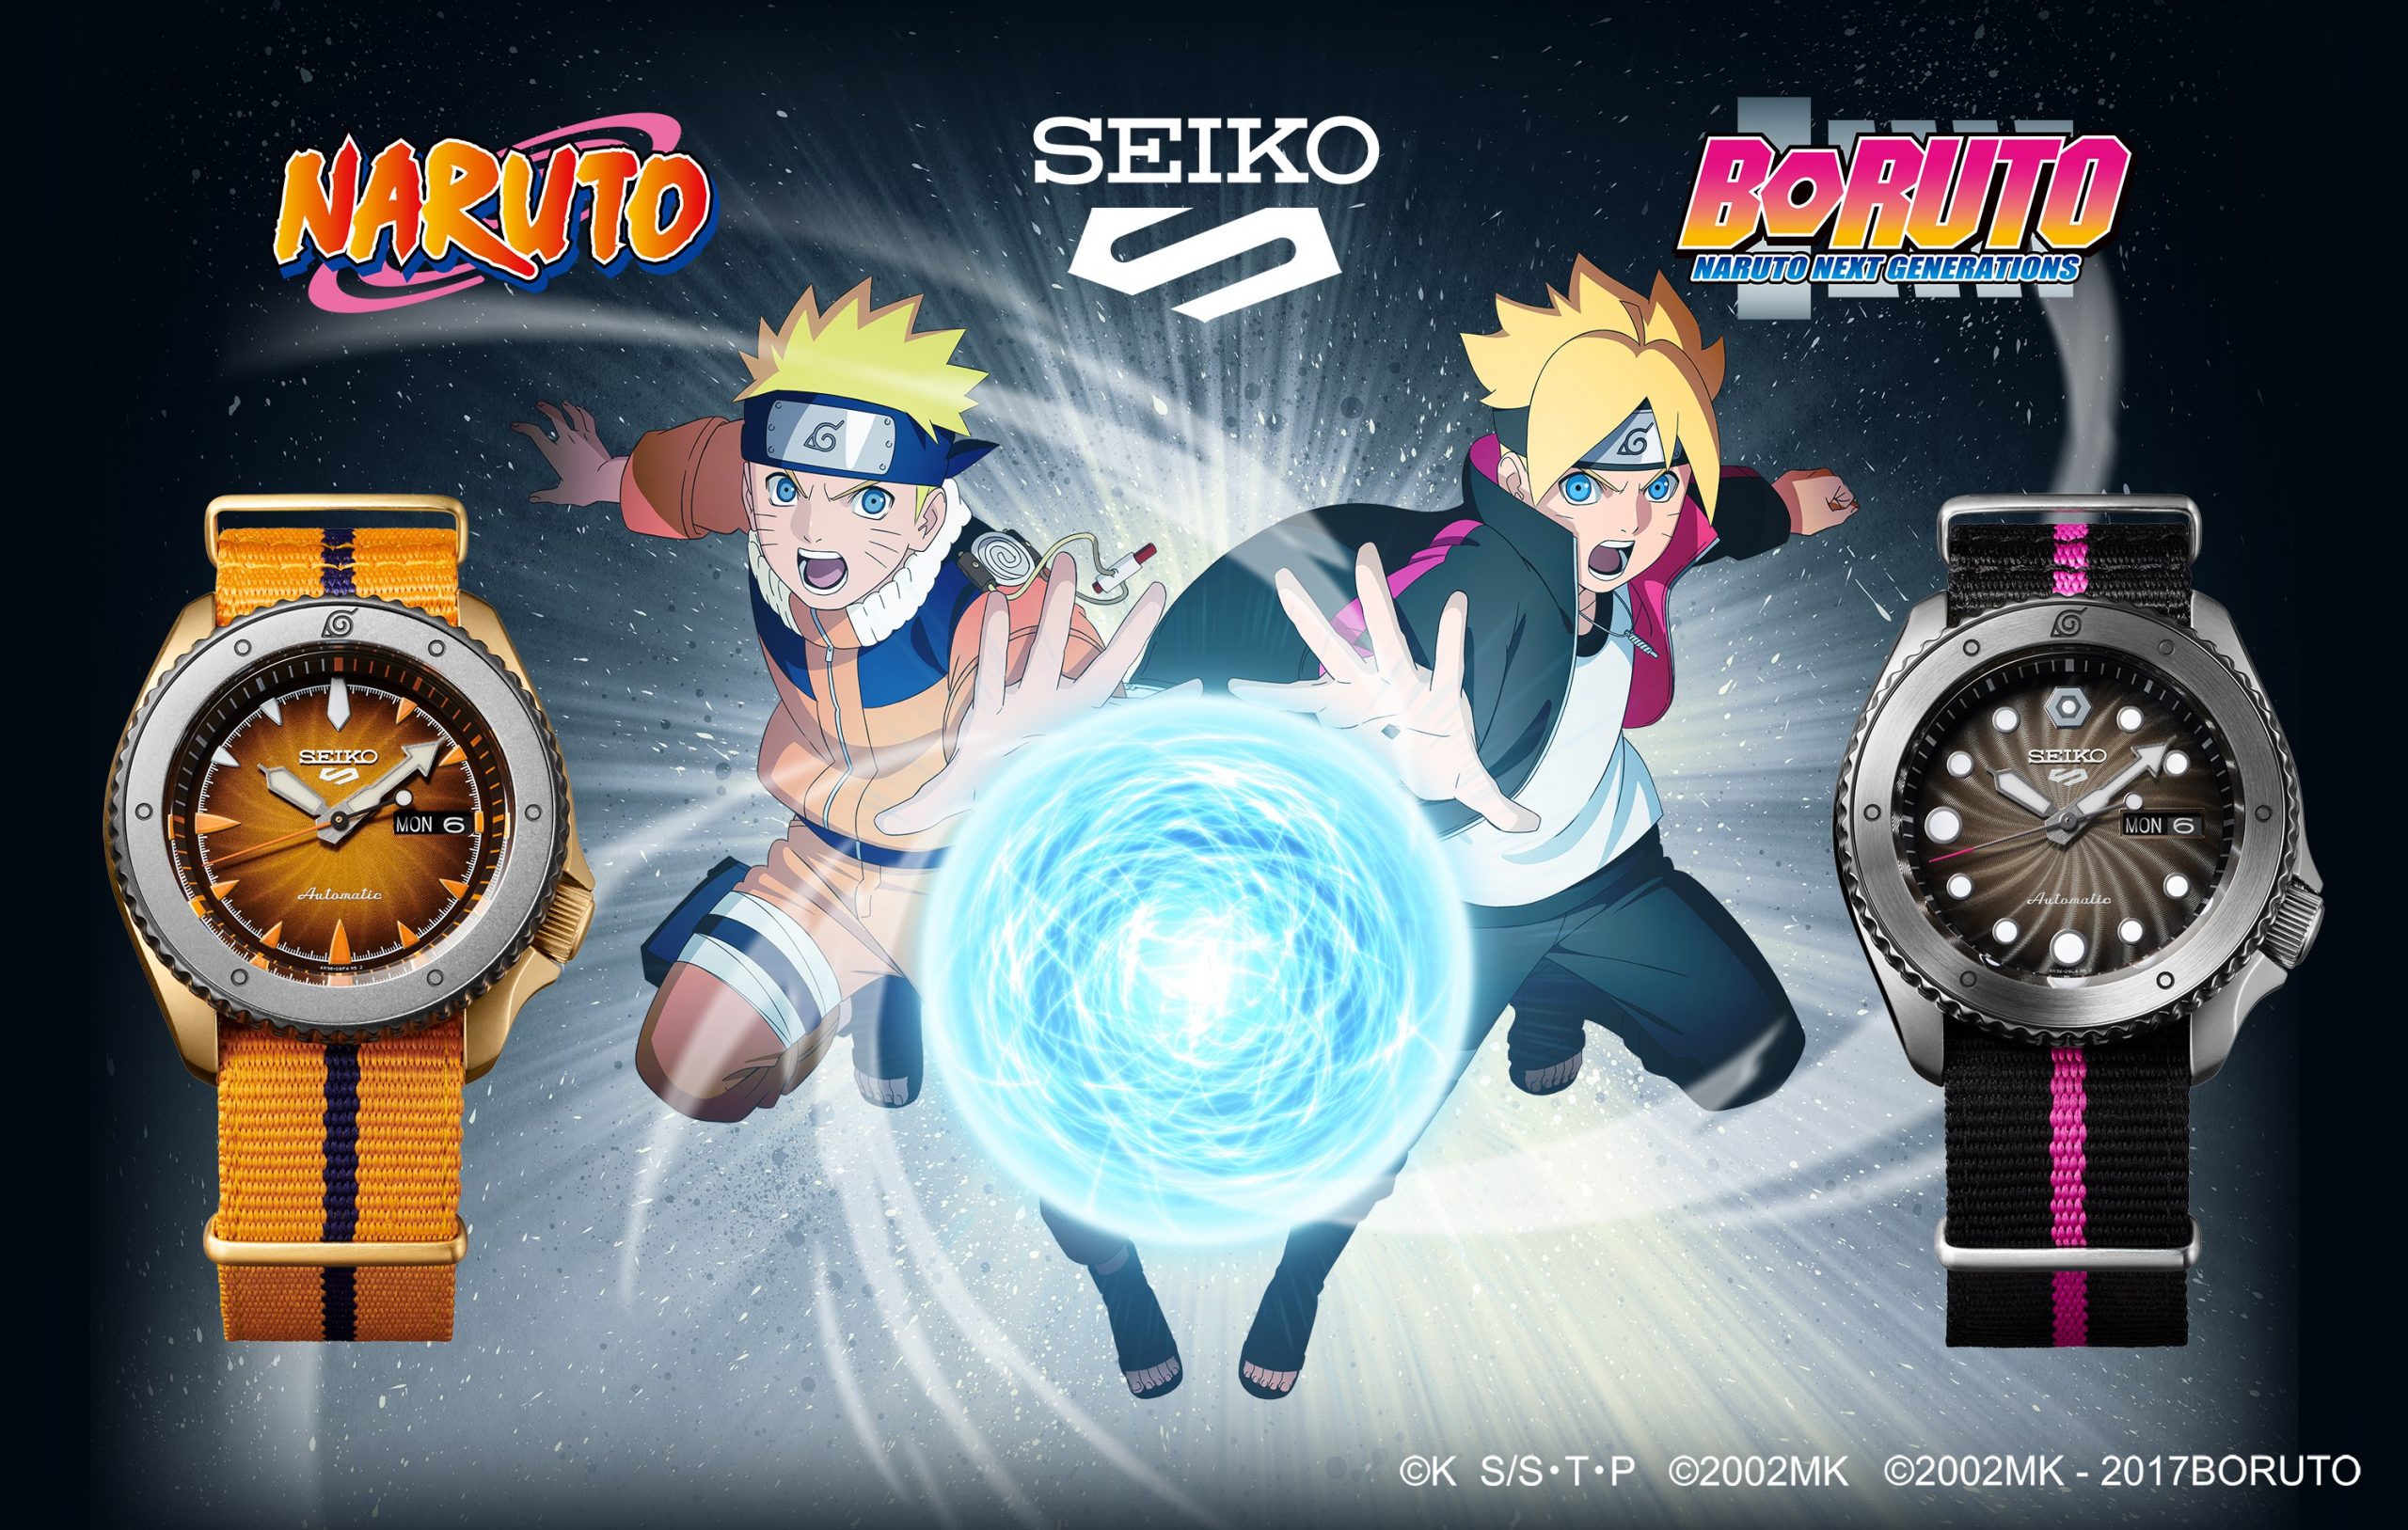 Seiko’s Naruto and Boruto Limited Edition Watches